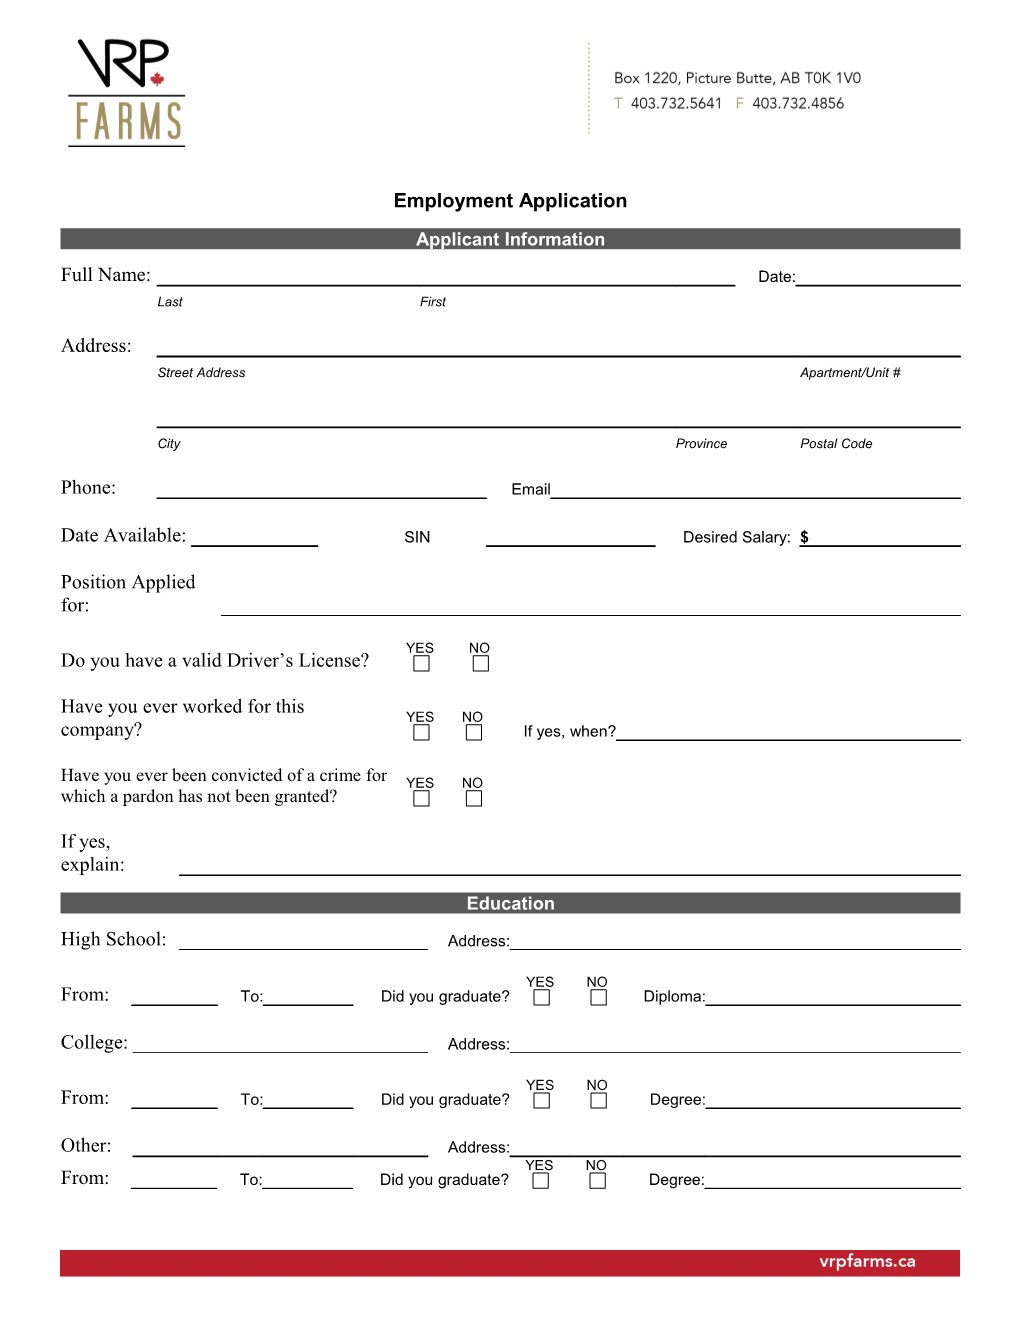 Employment Application s35